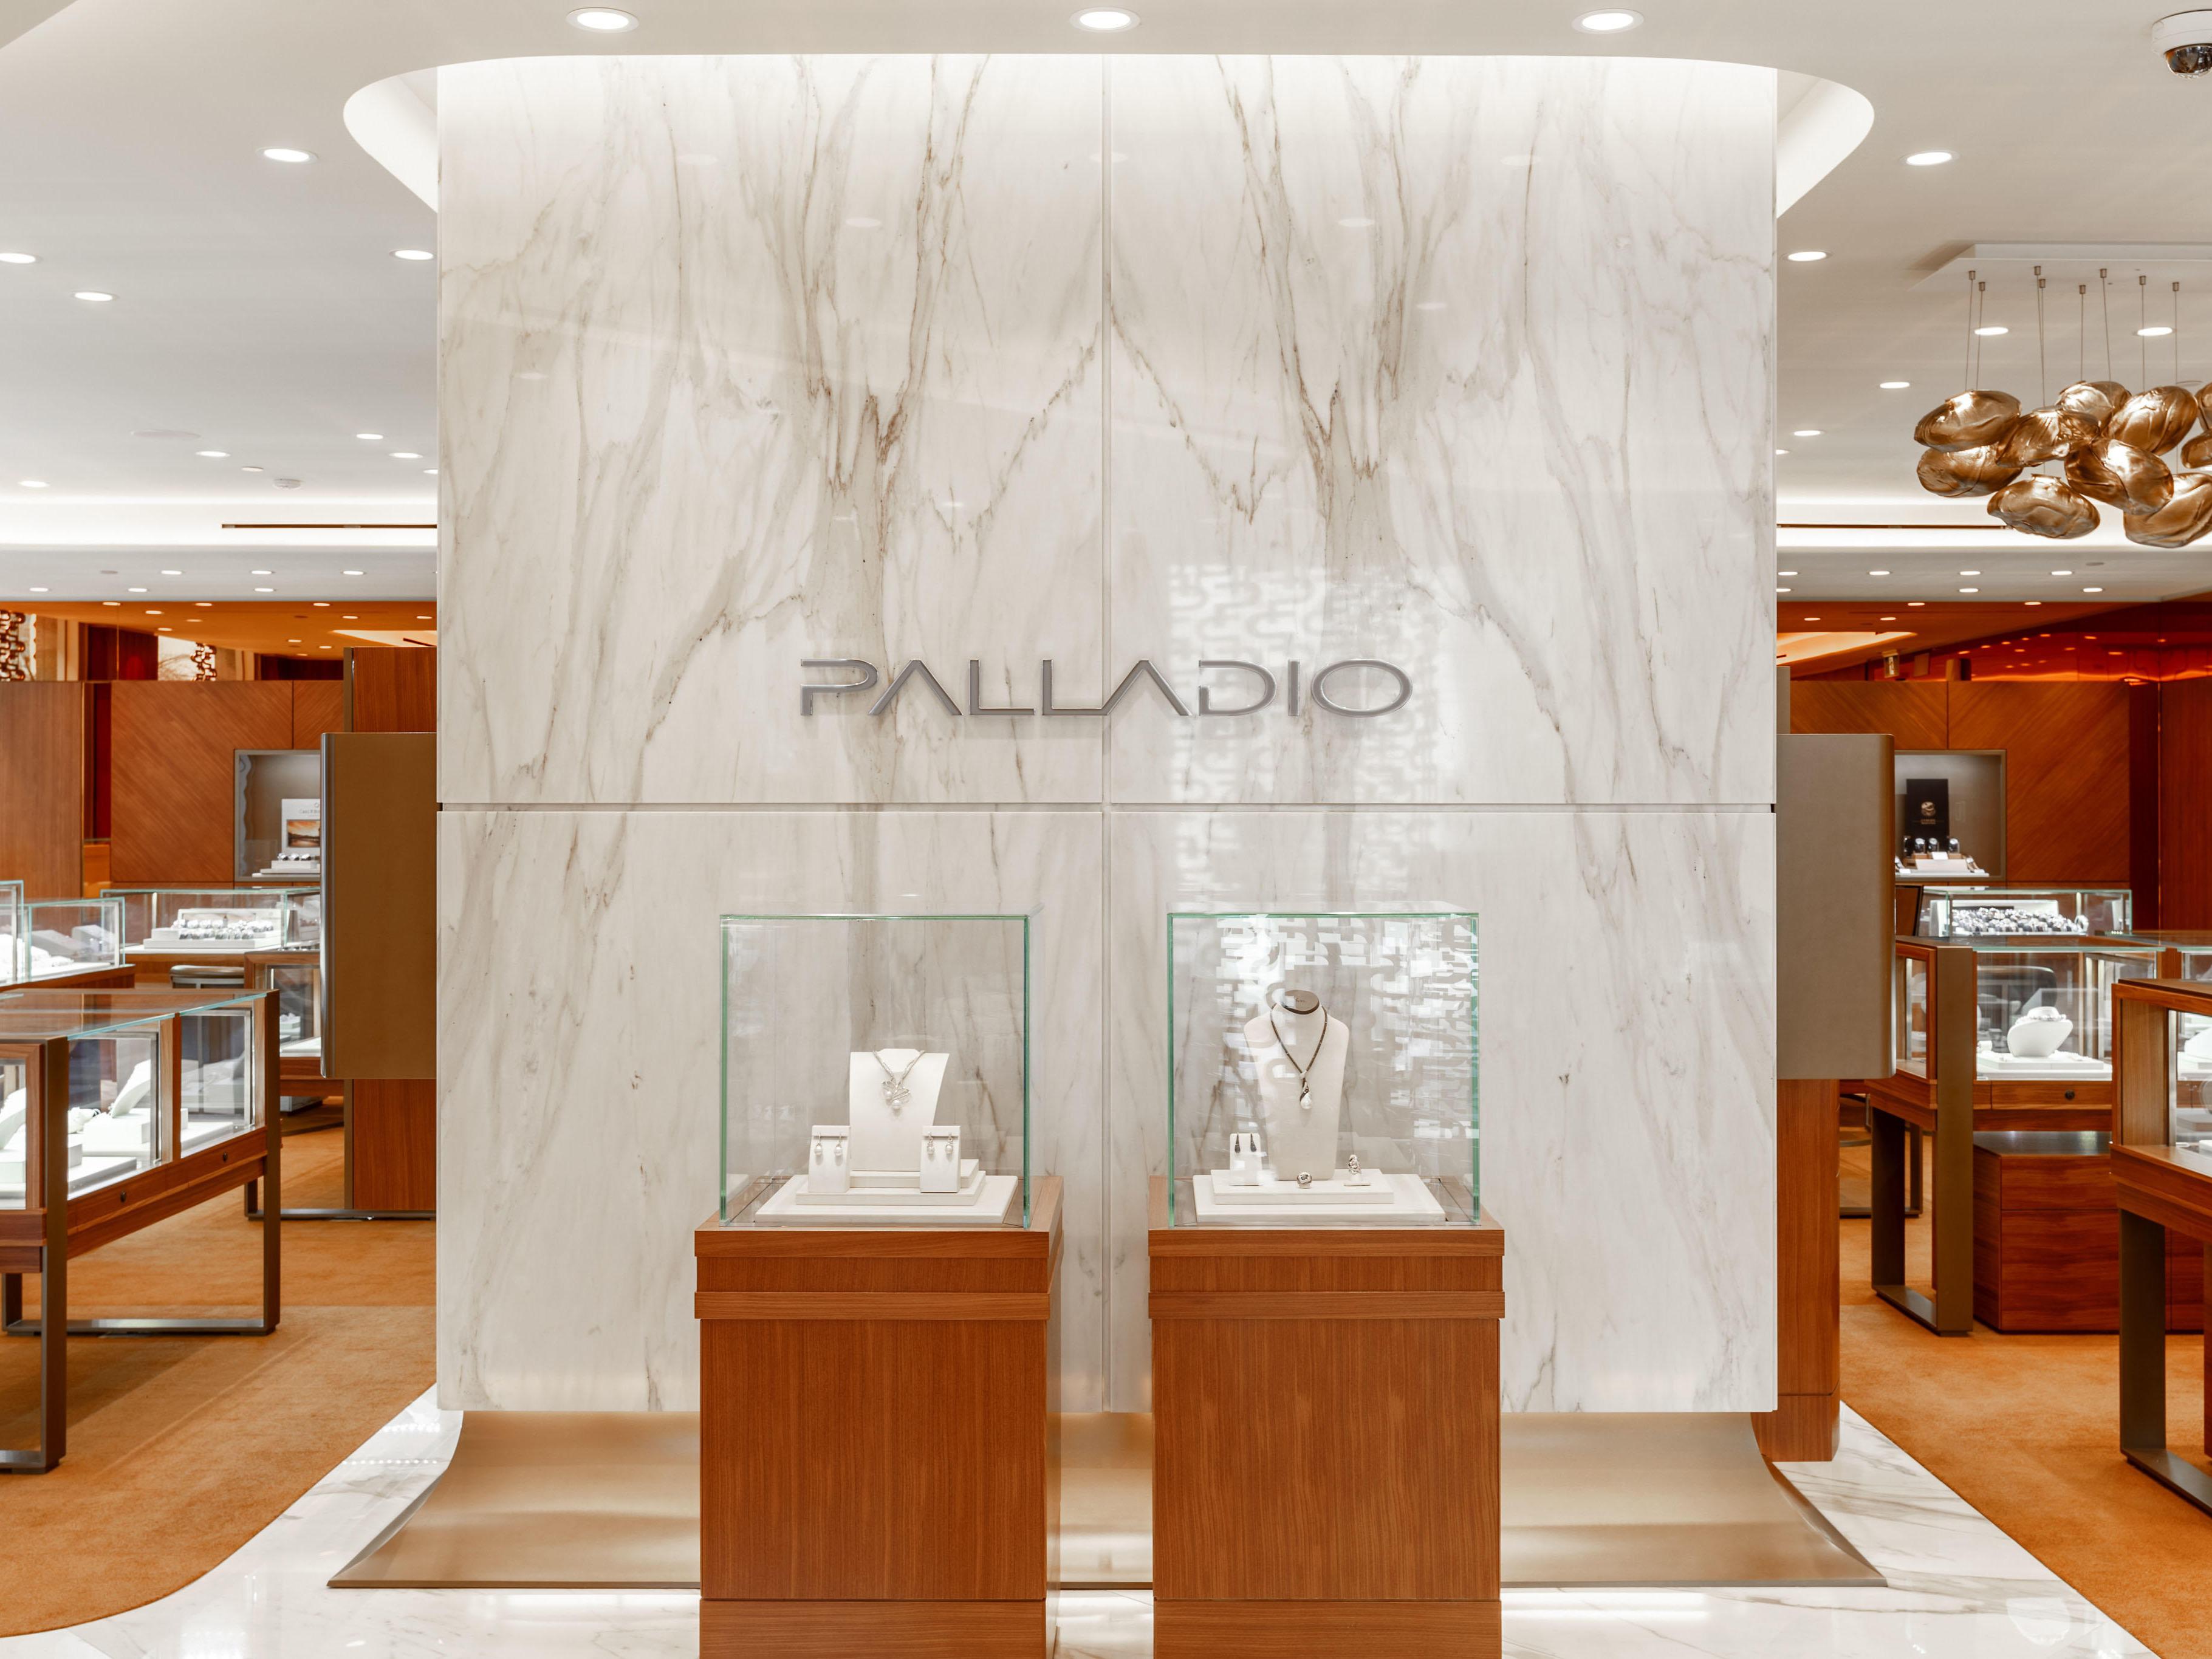 Images ‭Palladio Jewellers – Official Rolex Retailer